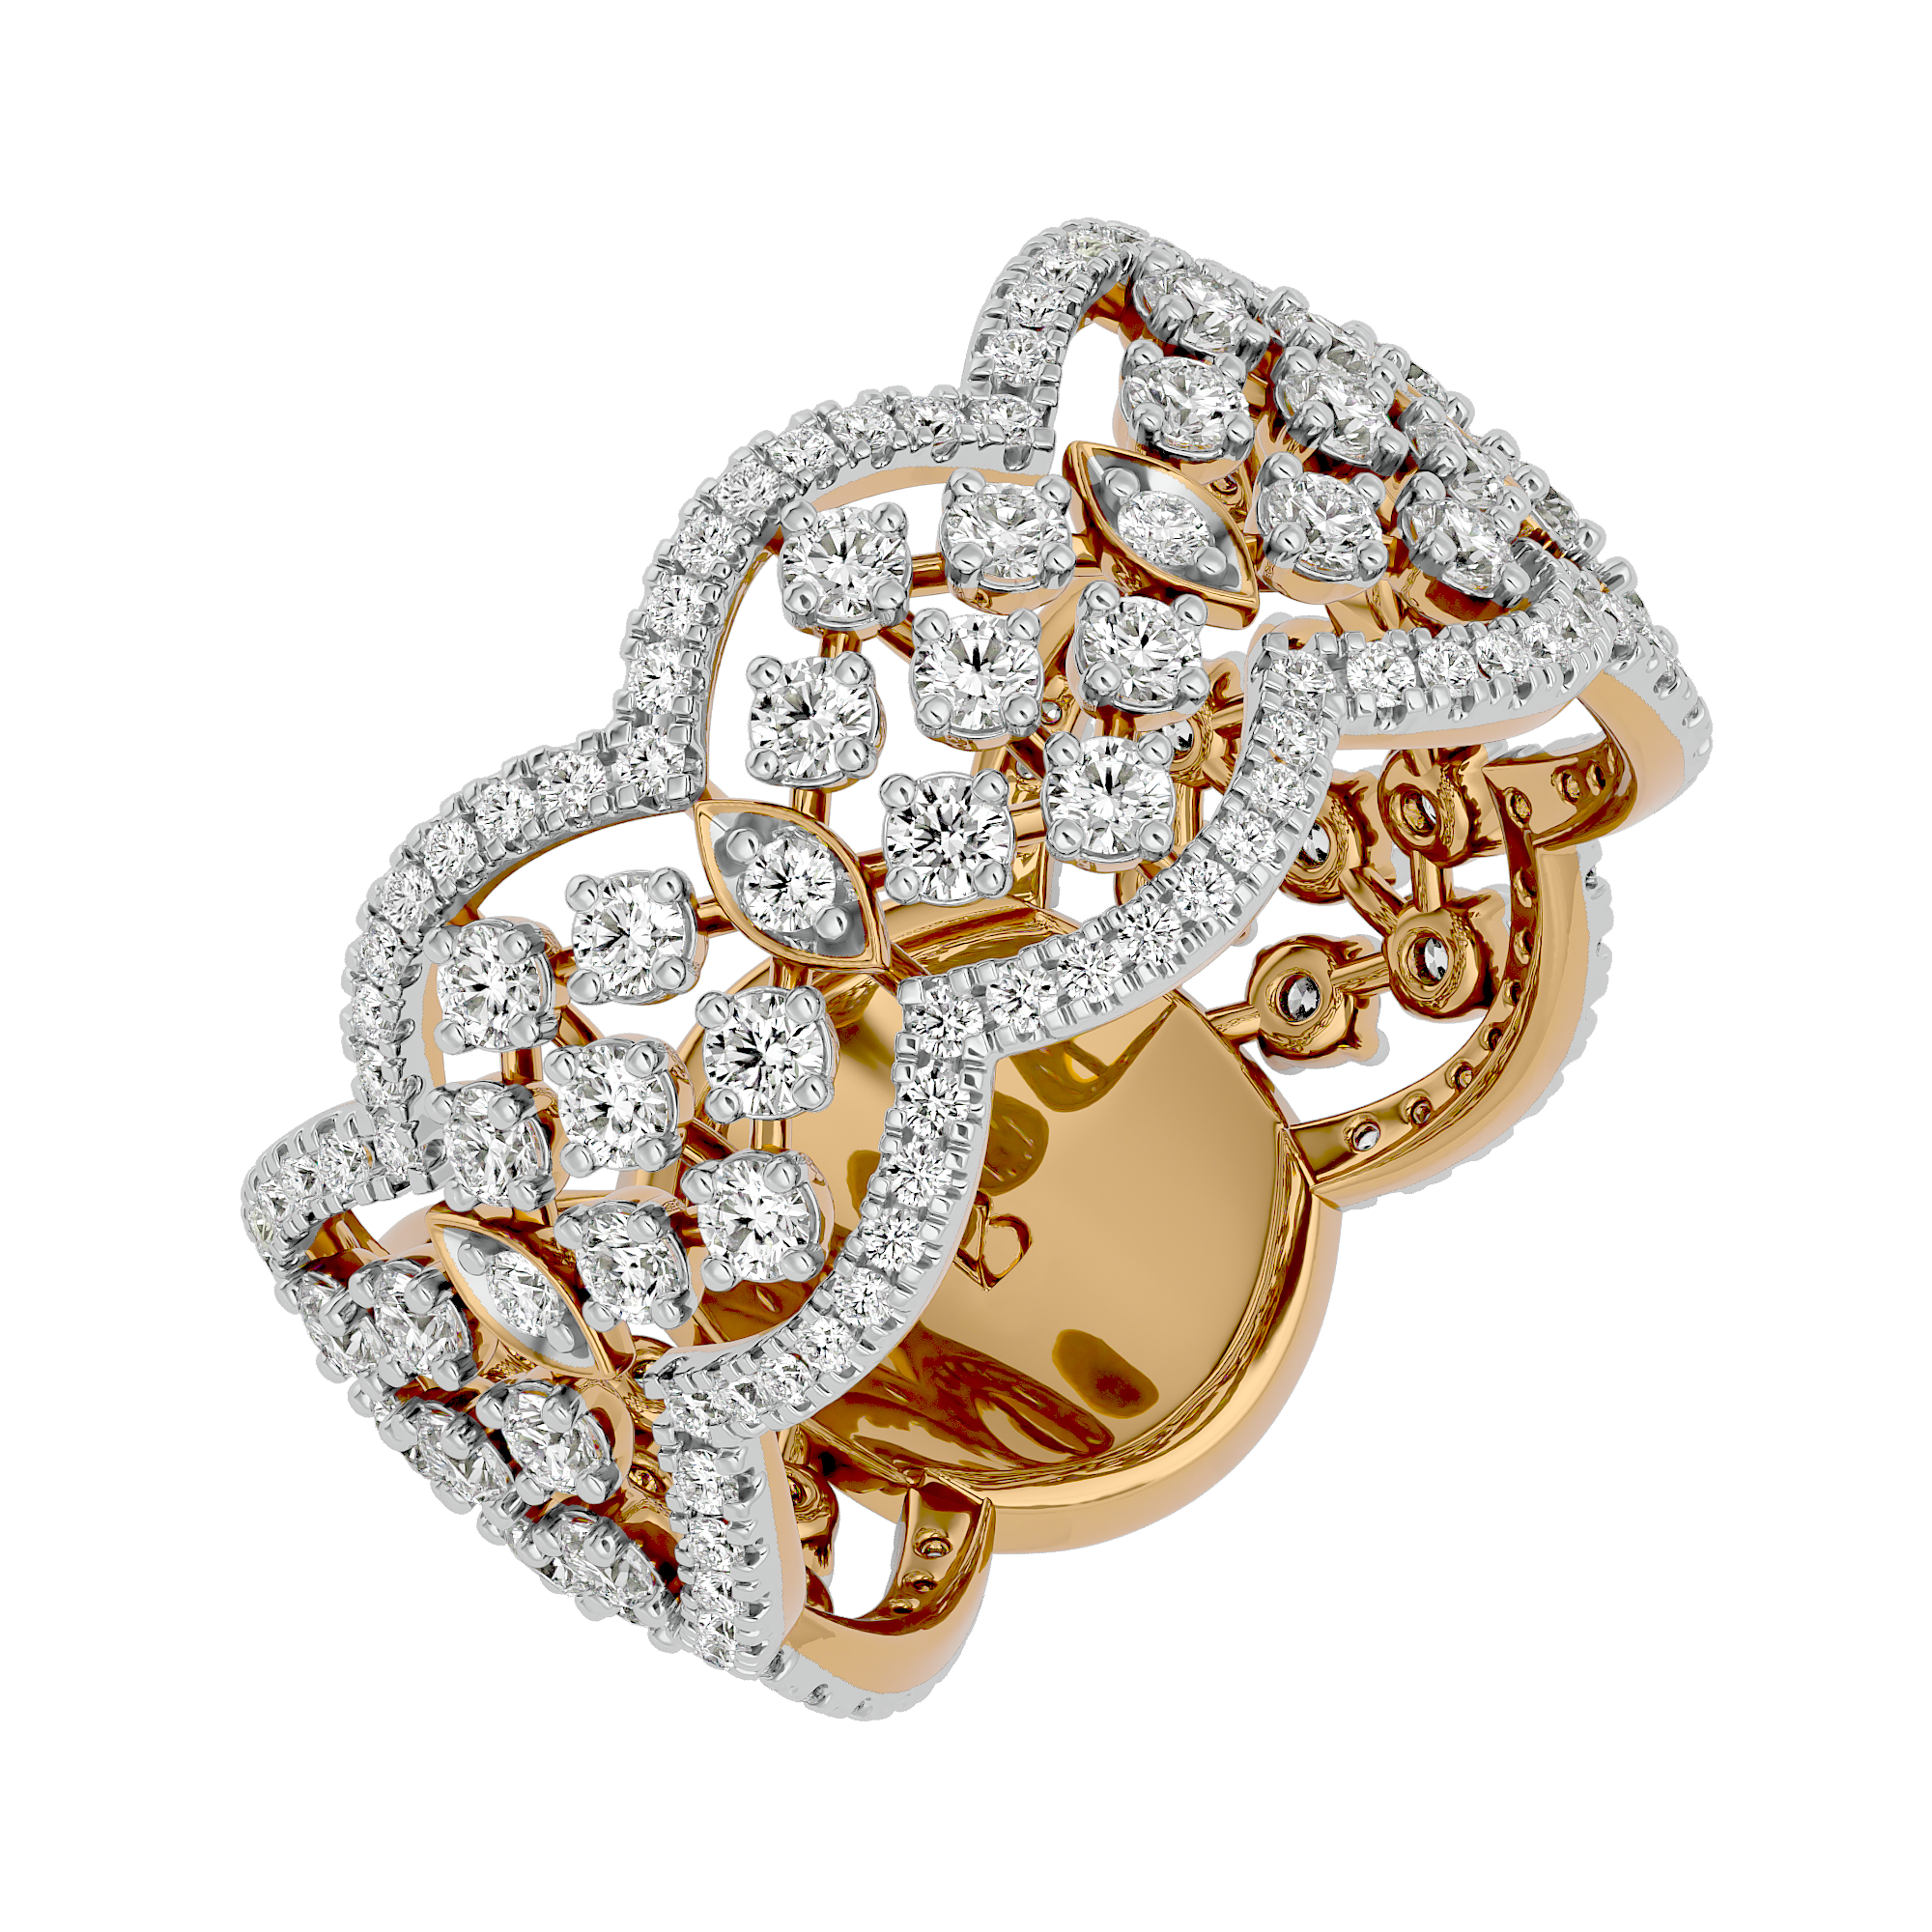 1 Carat Diamond Ring in 14Kt Yellow Gold - Blu Diamonds